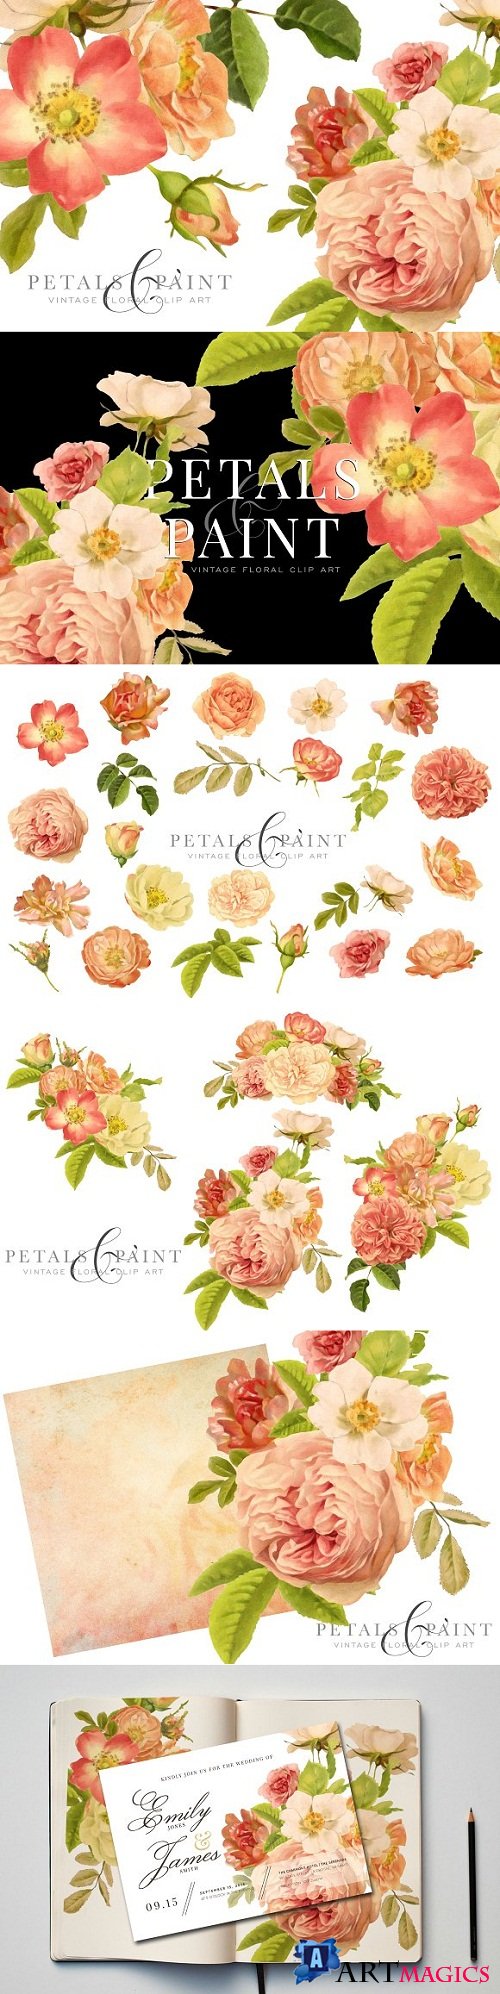 Petals & Paint - Floral Clip Art 2828197